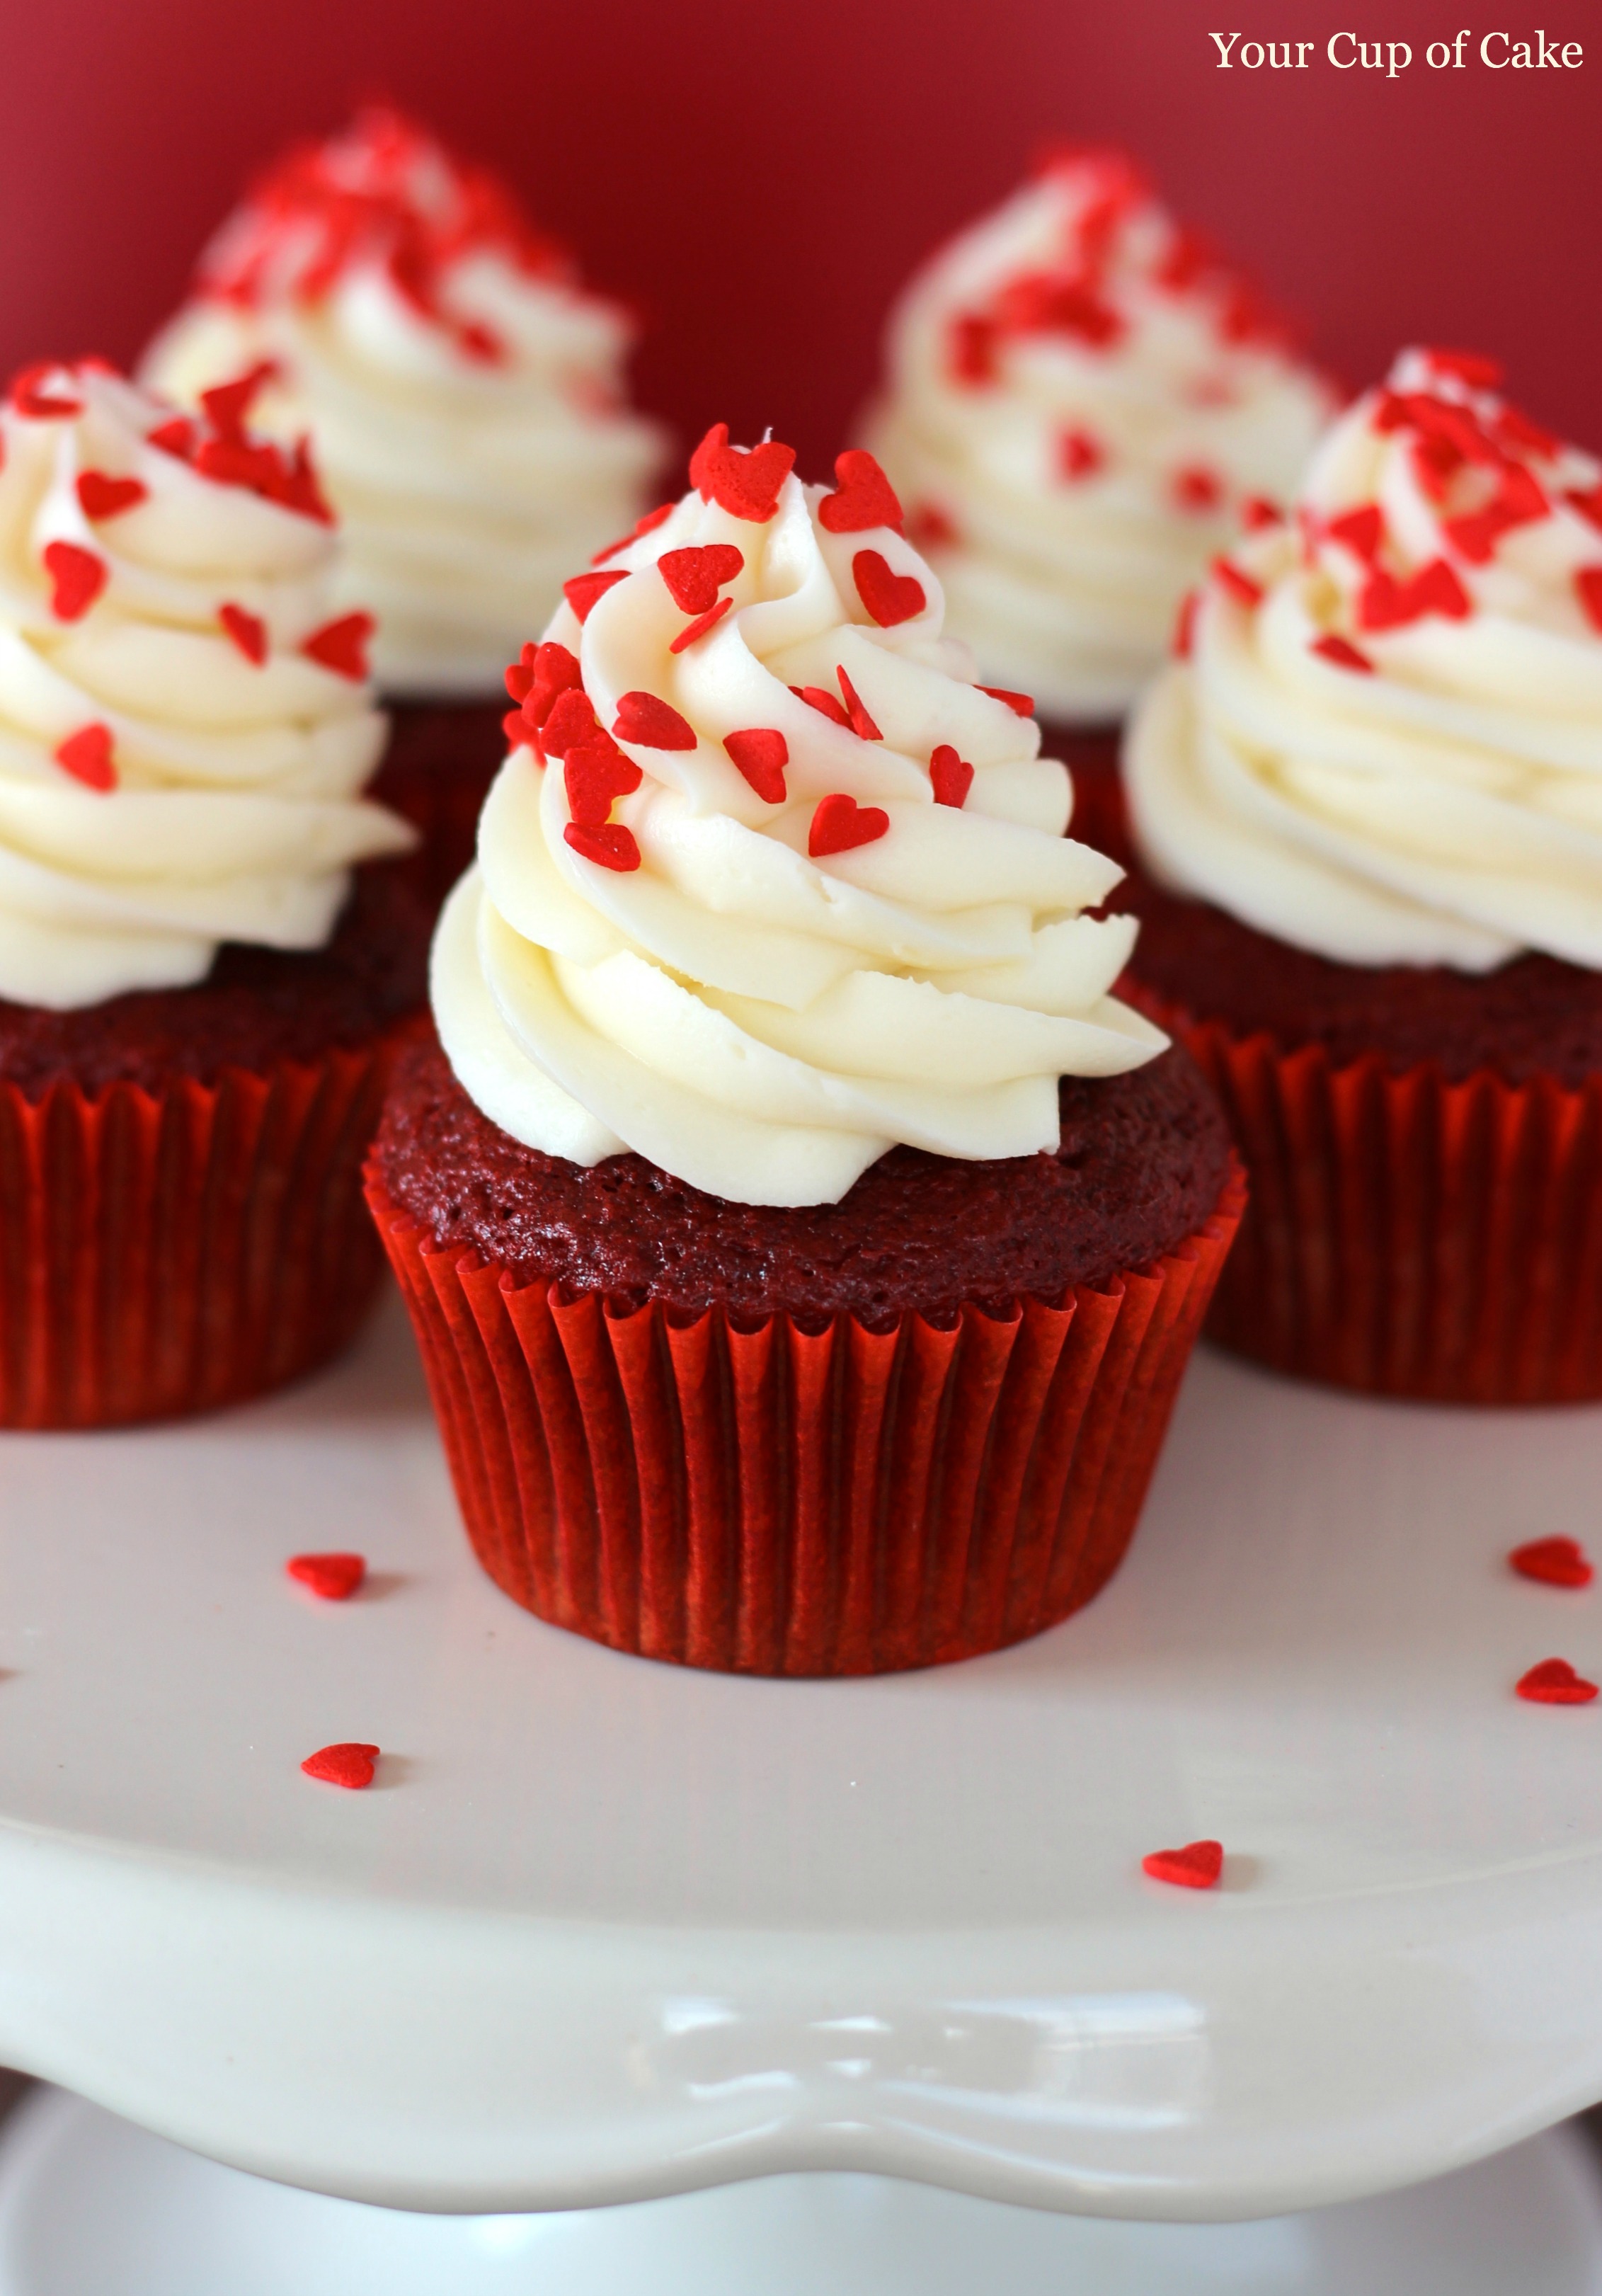 https://www.yourcupofcake.com/wp-content/uploads/2013/01/Red-Velvet-Cupcakes.jpg